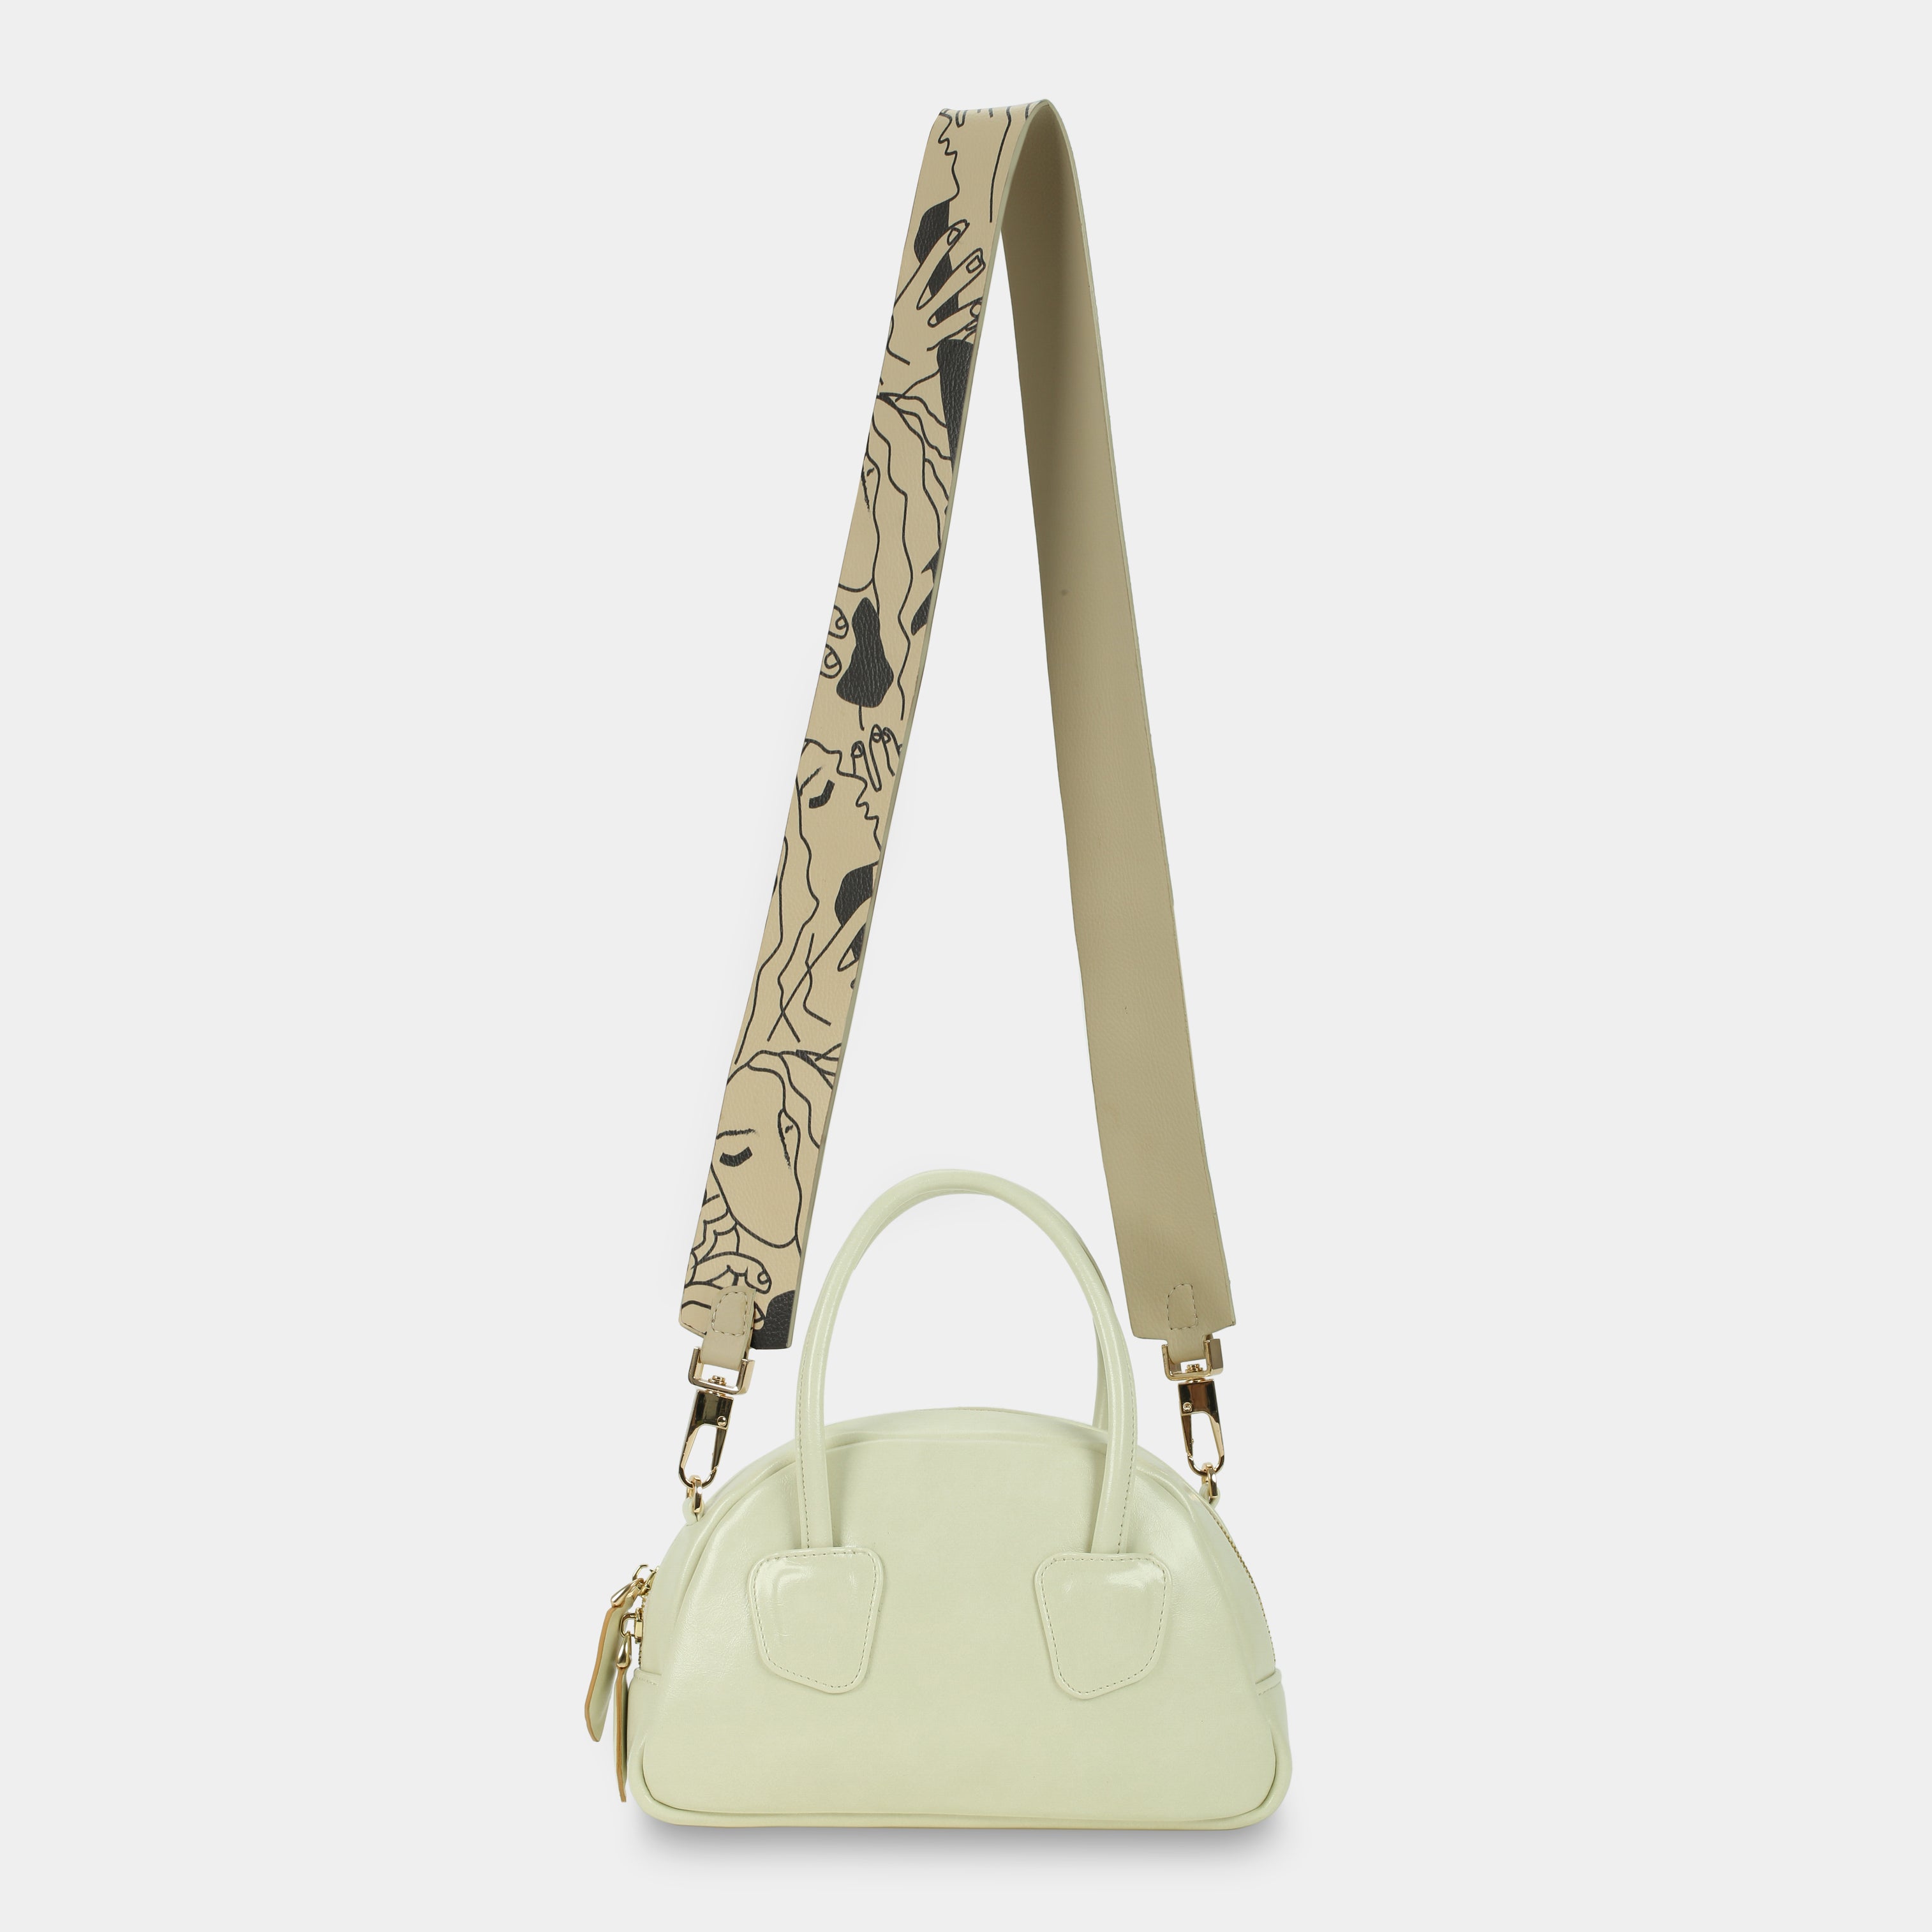 TACOS Handbag in Brown color large size (M)